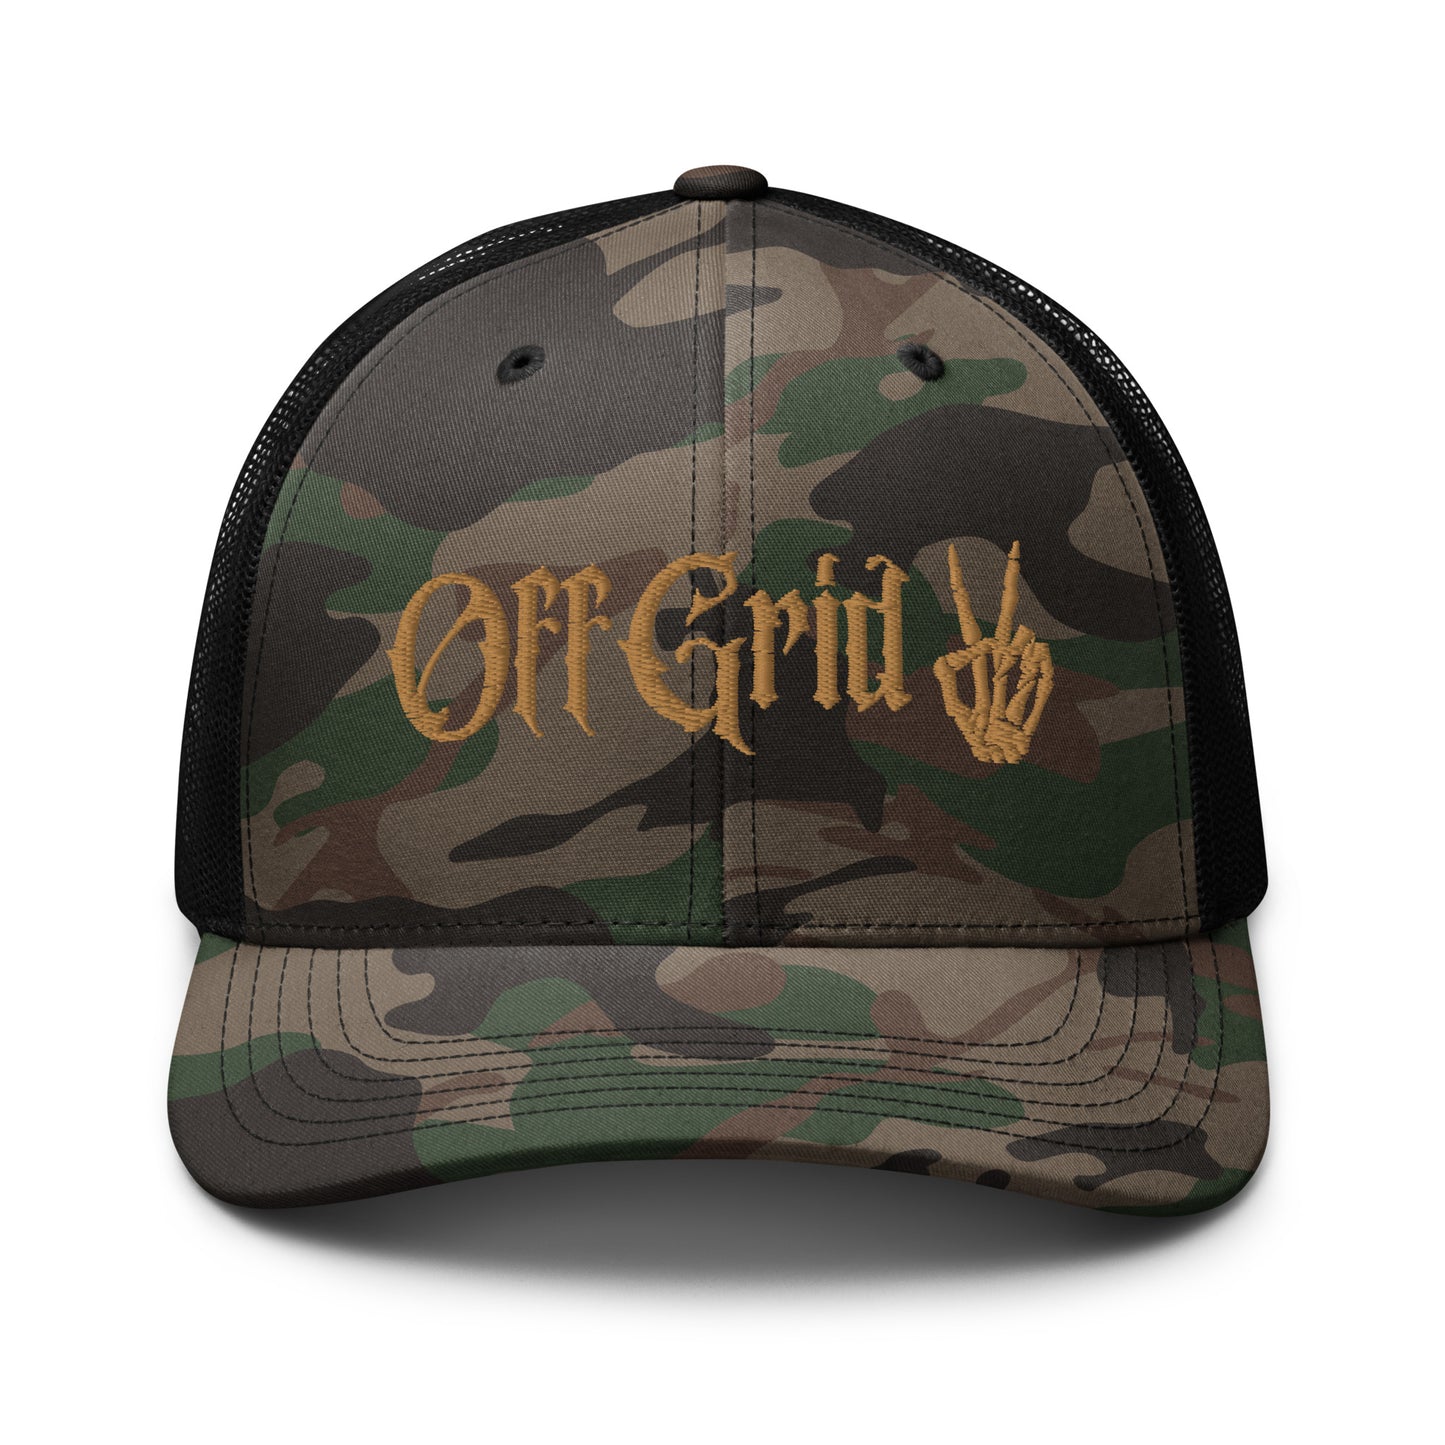 OFF GRID Camouflage trucker hat